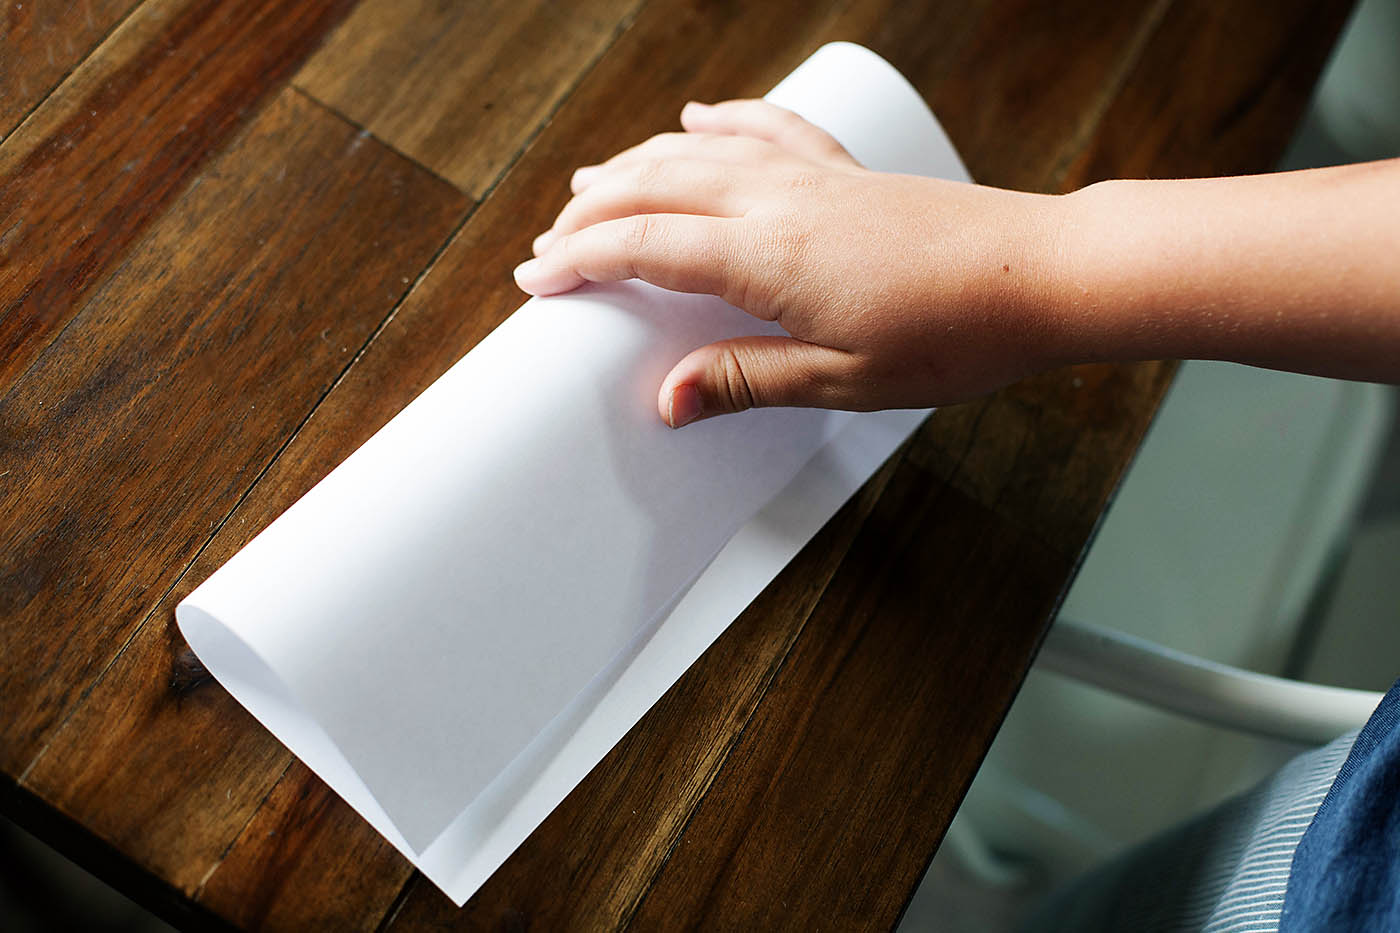 Quick trick: Walk through a piece of paper